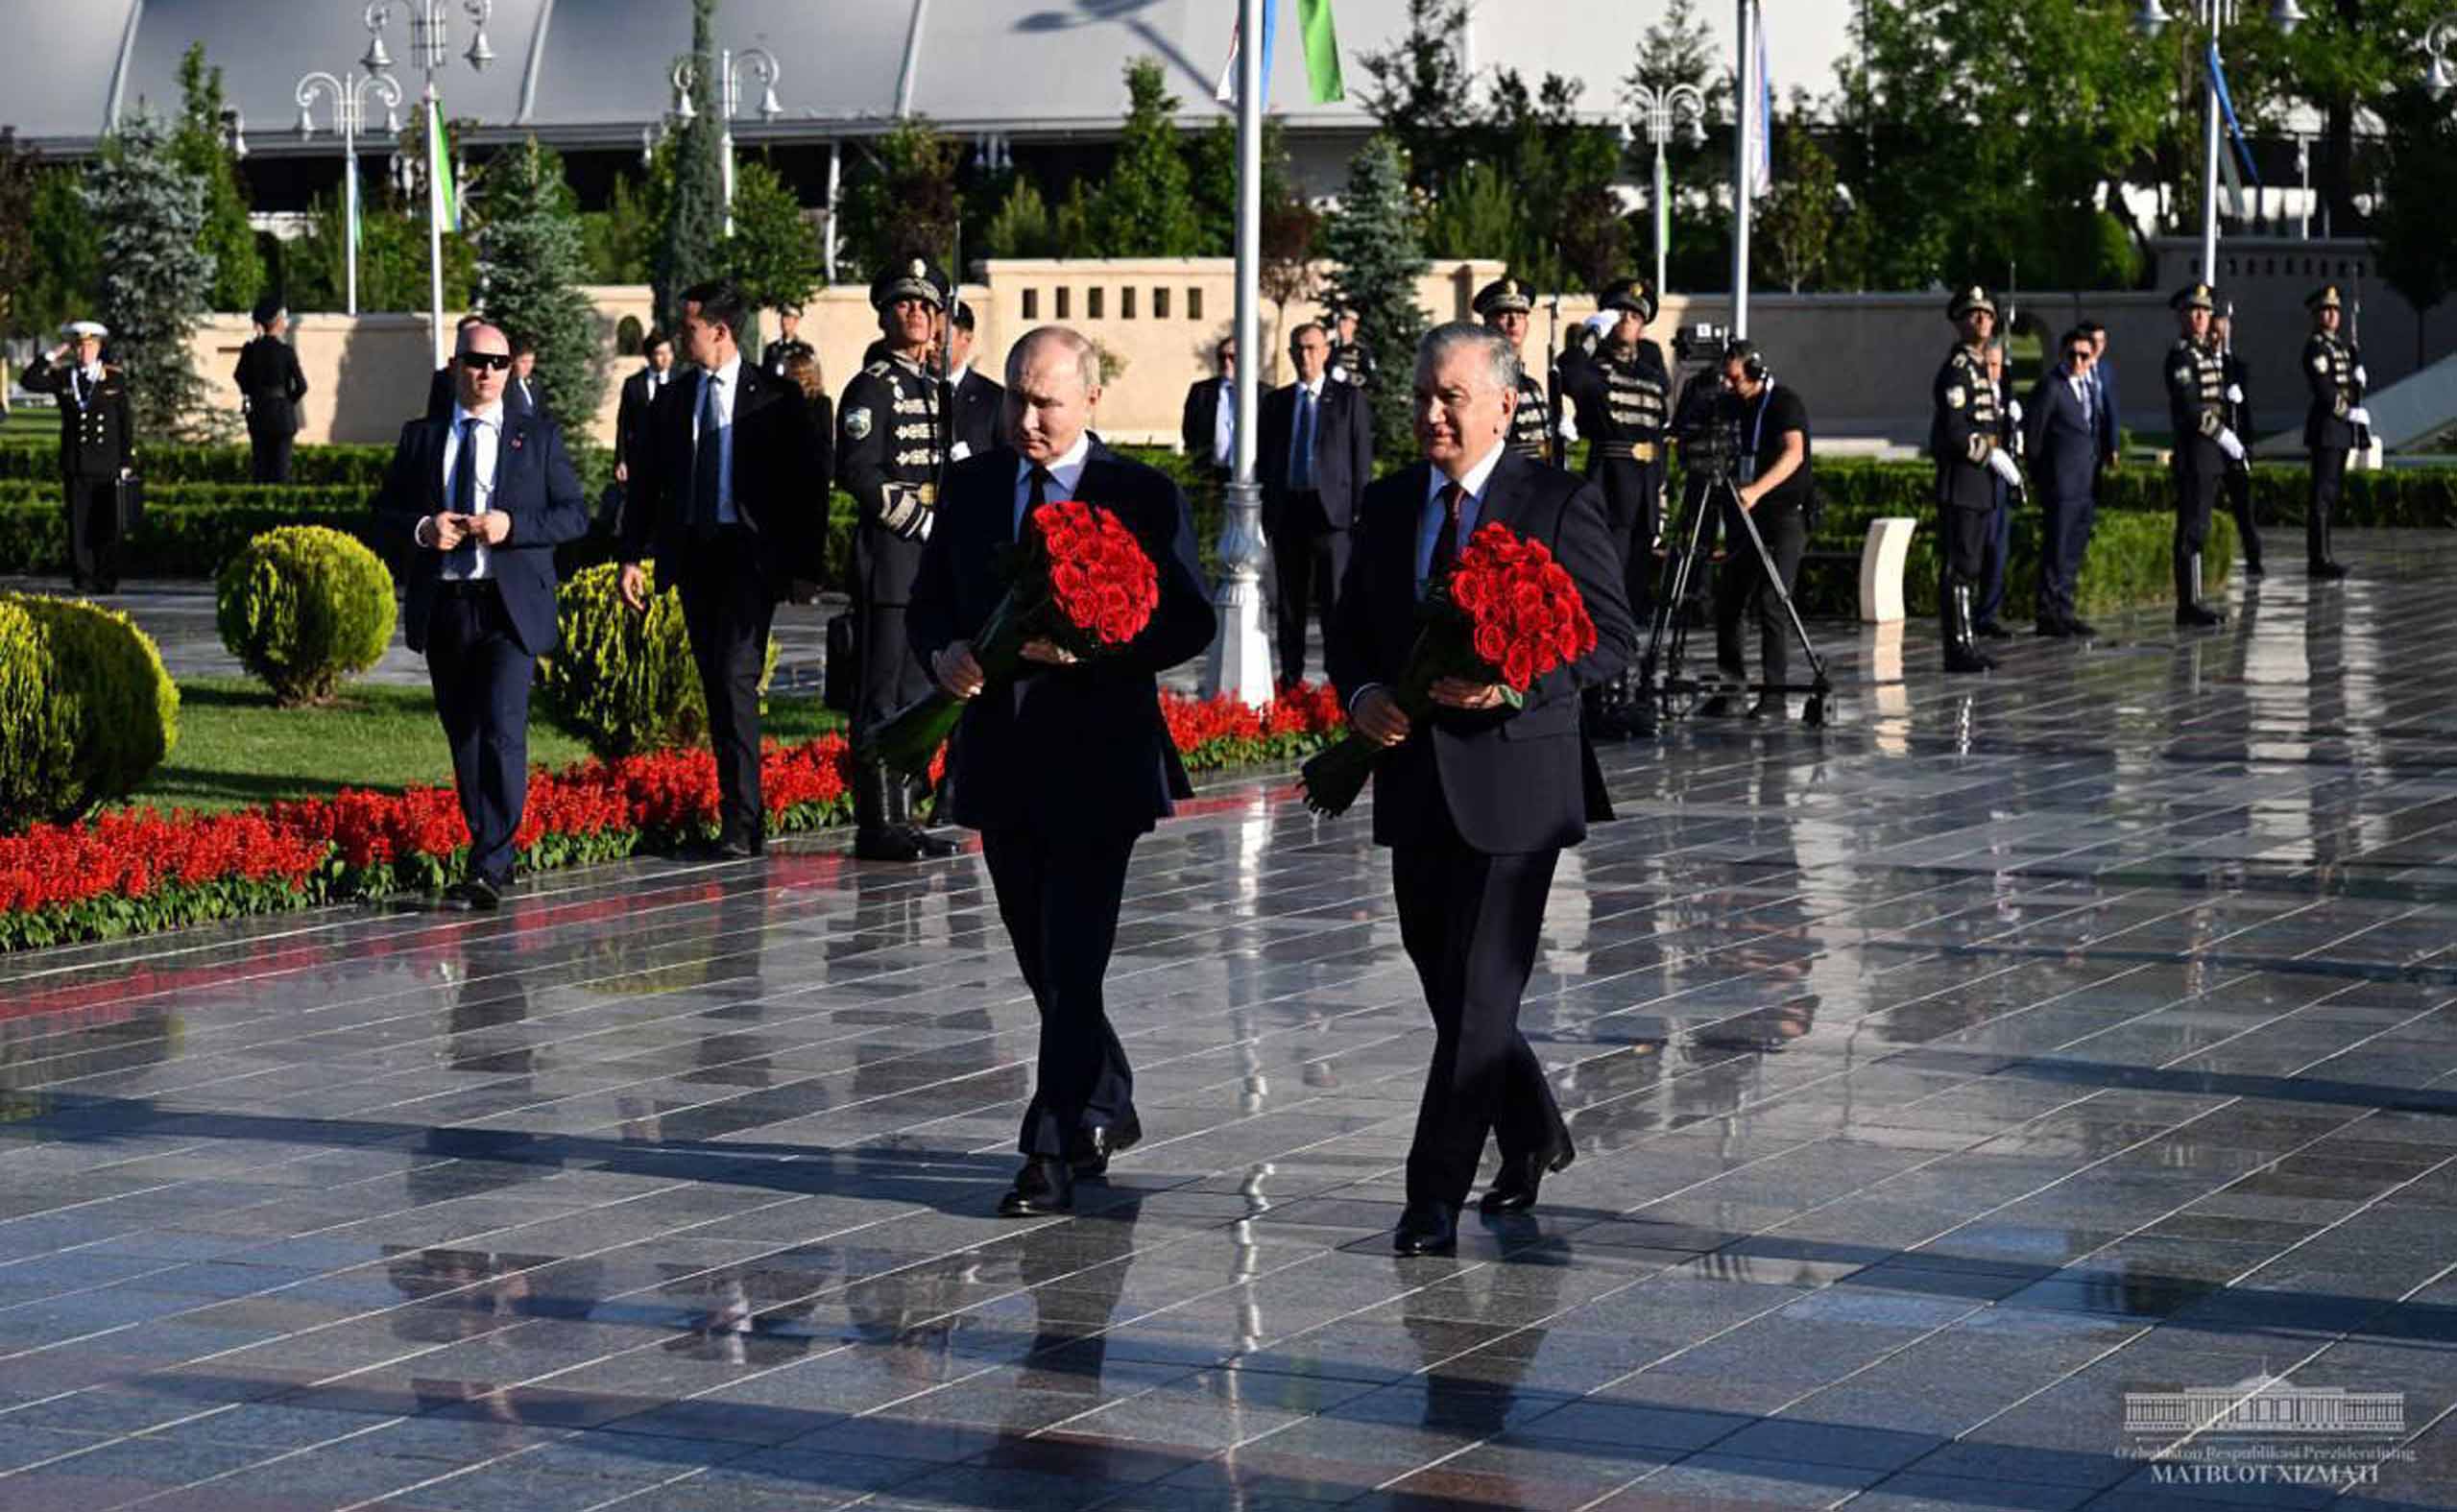 As part of the Uzbekistan-Russia summit, presidents Shavkat Mirziyoyev and Vladimir Putin visited the Victory Park Memorial Complex in Tashkent